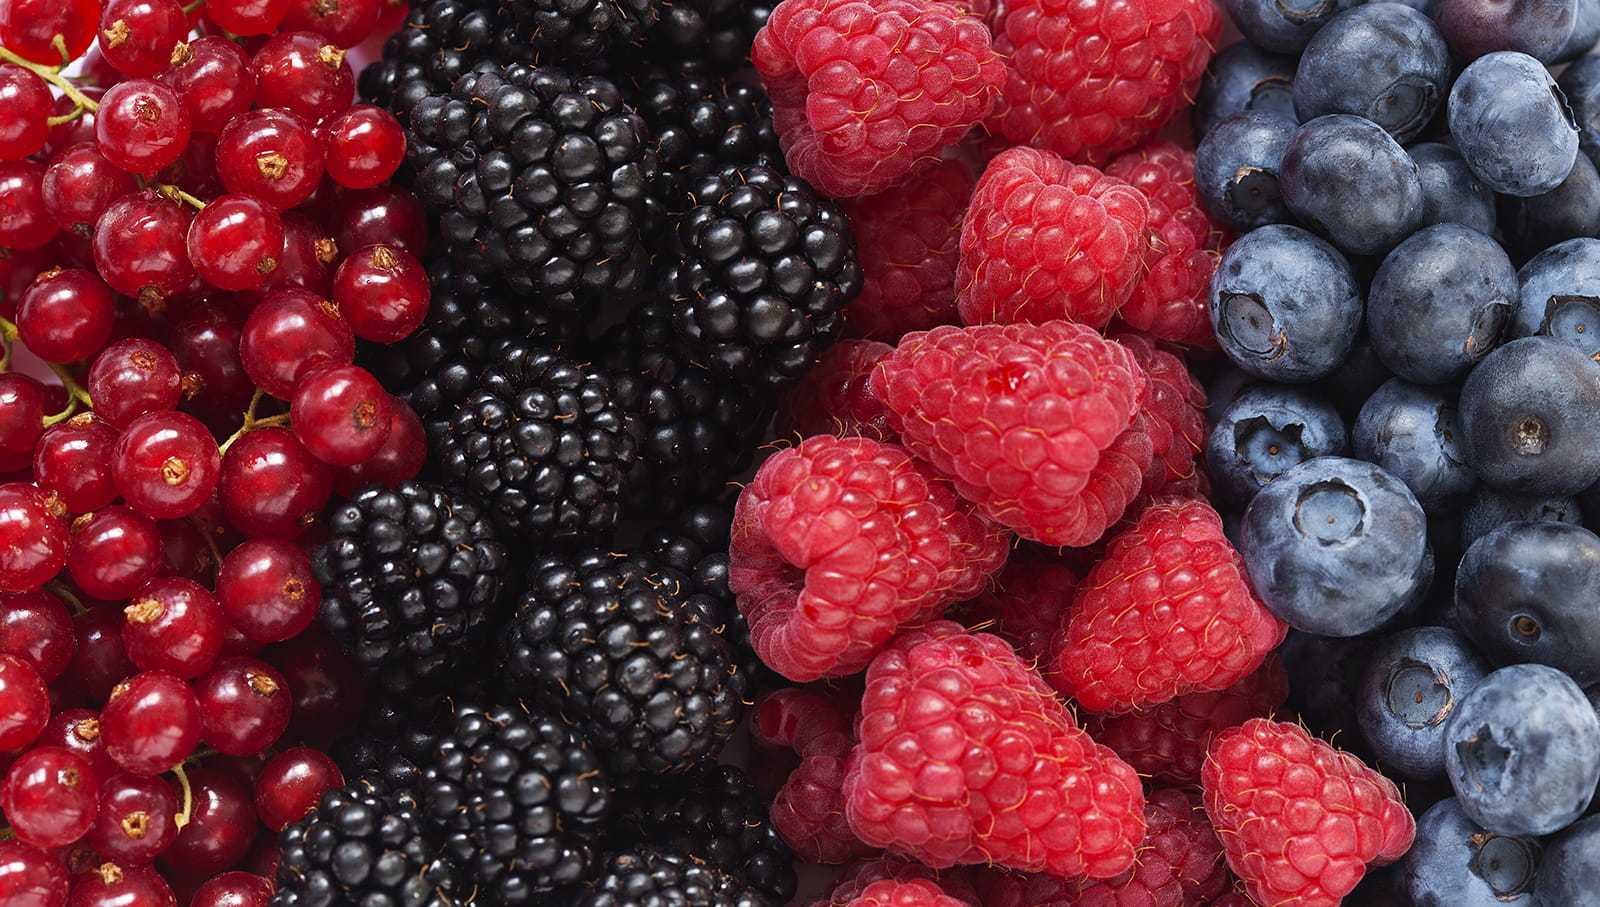 Hi-res photo of various berries